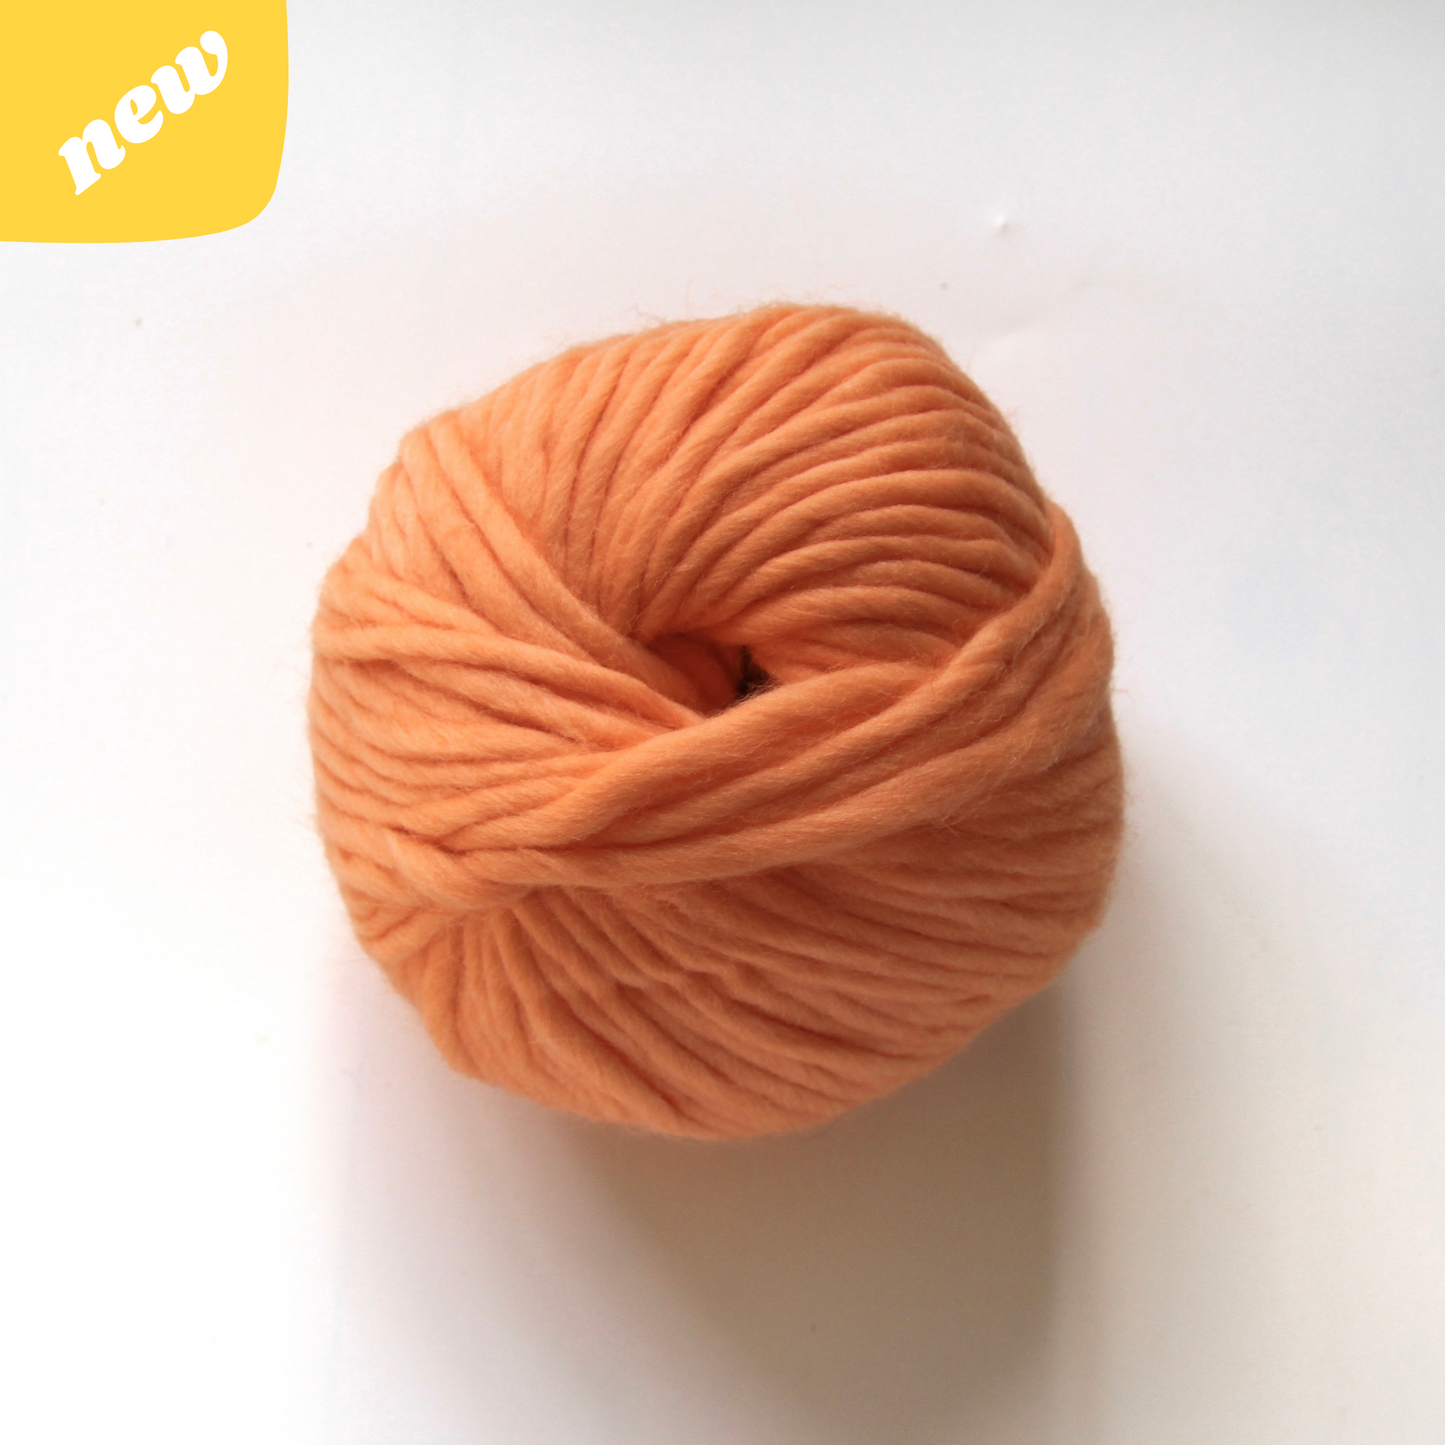 Chunky Cloud - Sherbet Orange | Chunky Merino Wool